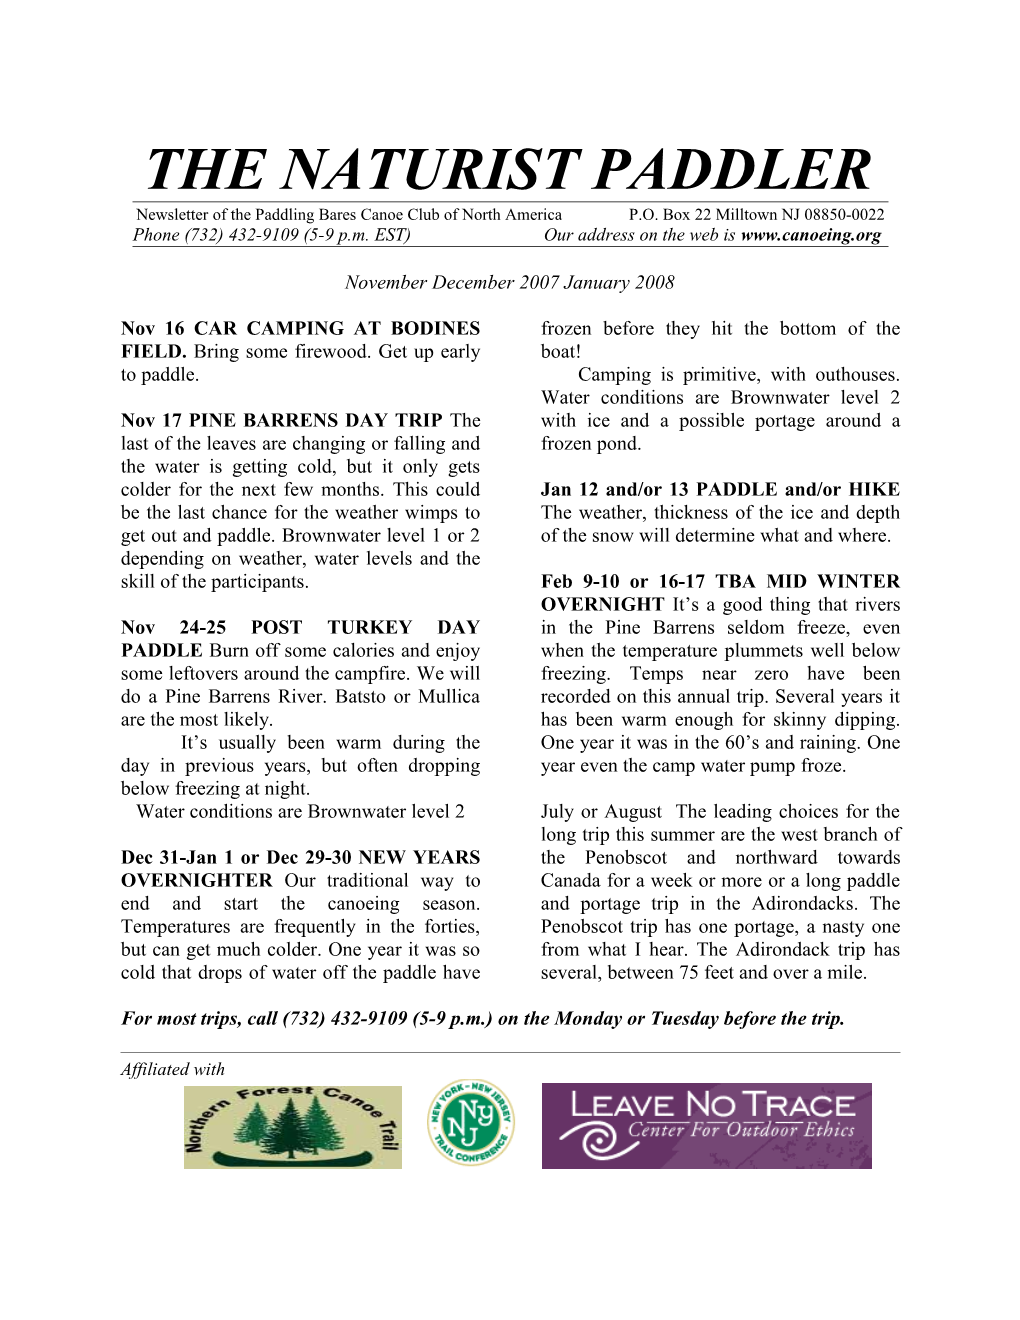 The Naturist Paddler